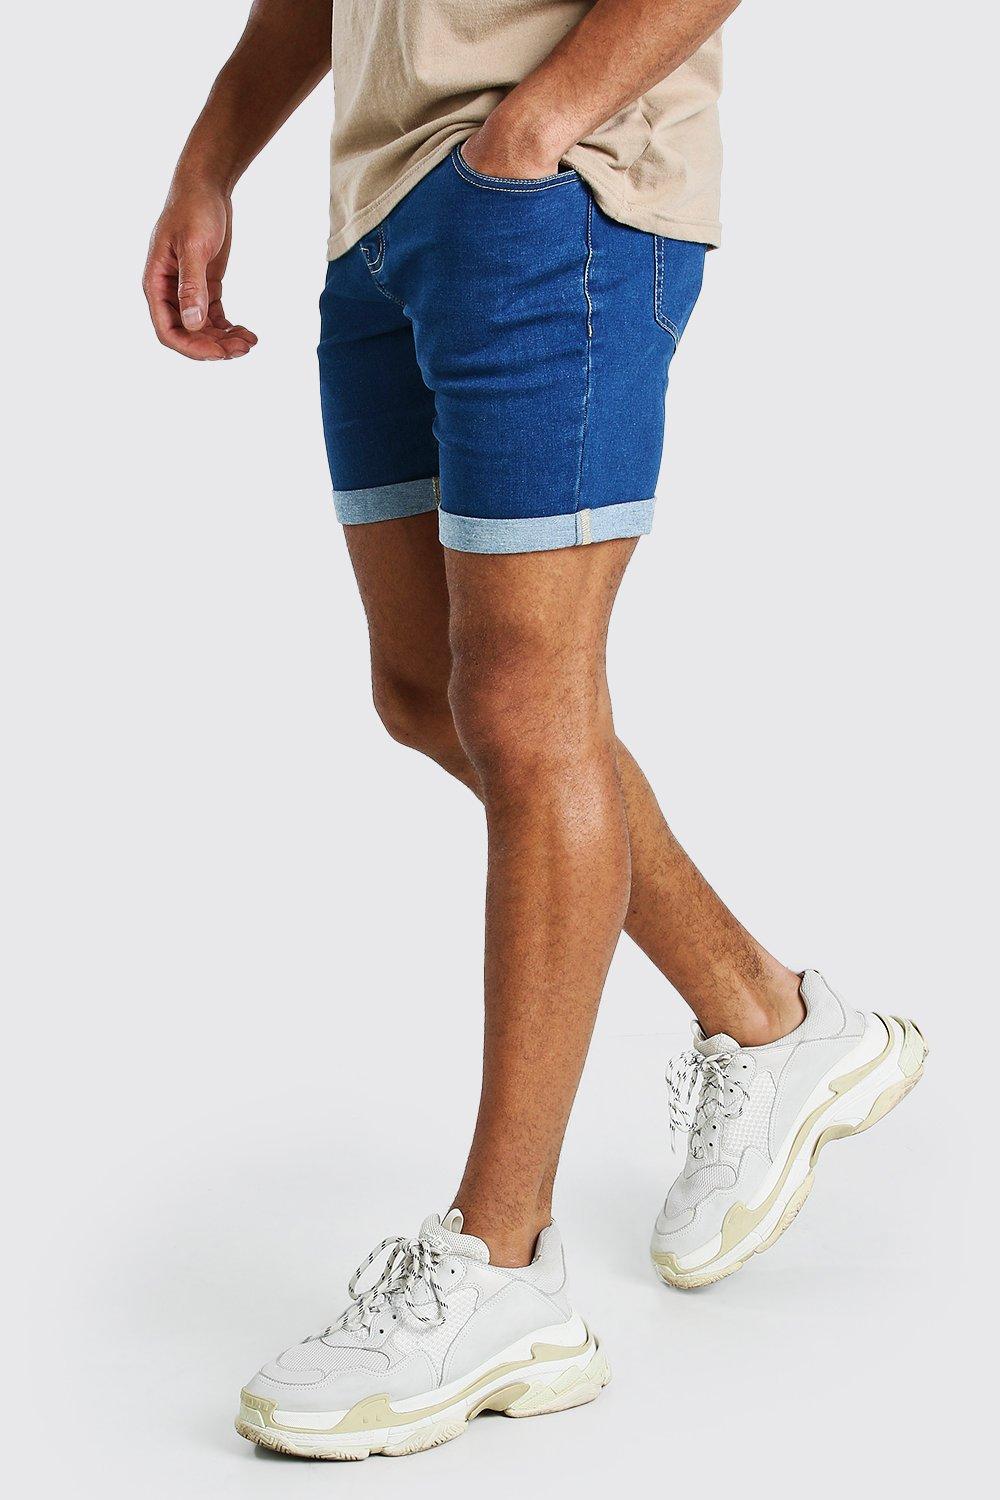 mens jean shorts nz